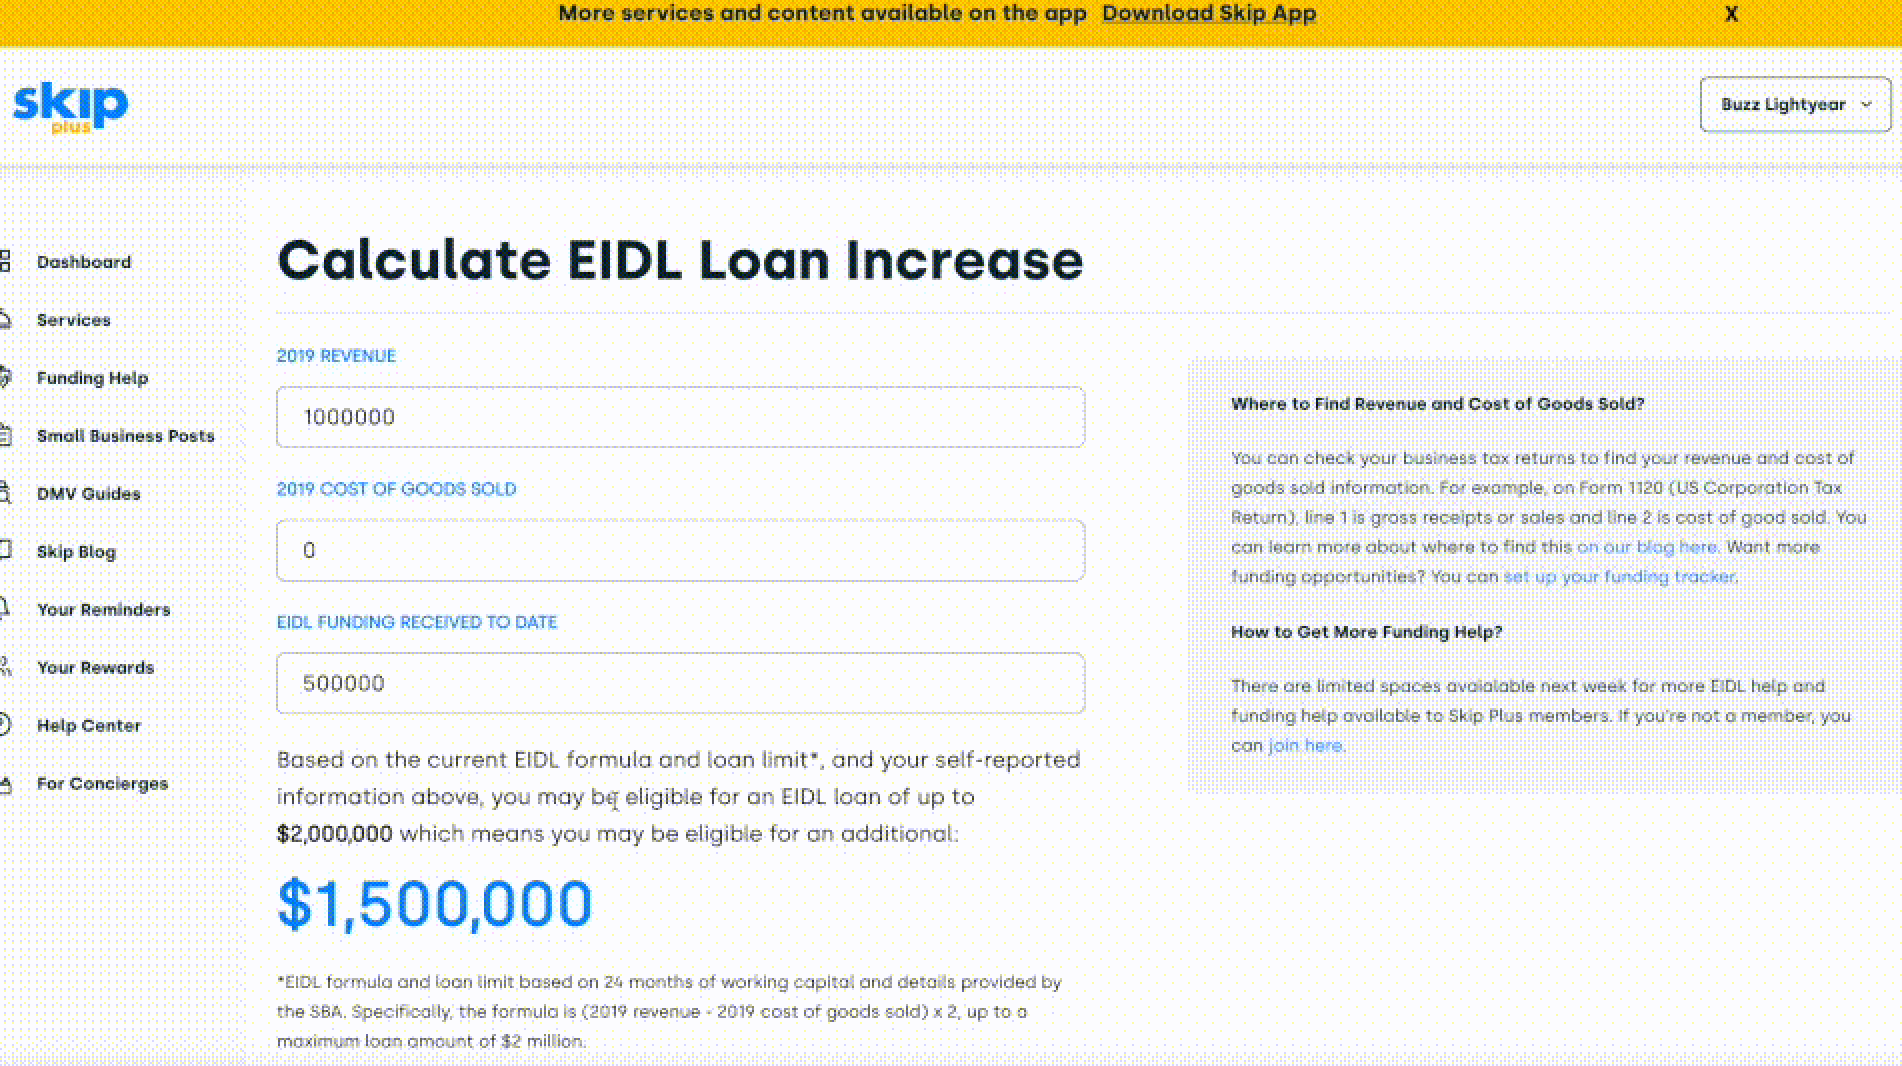 https://static.helloskip.com/blog/2021/08/How-to-Calculate-EIDL-Loan-Increase.png